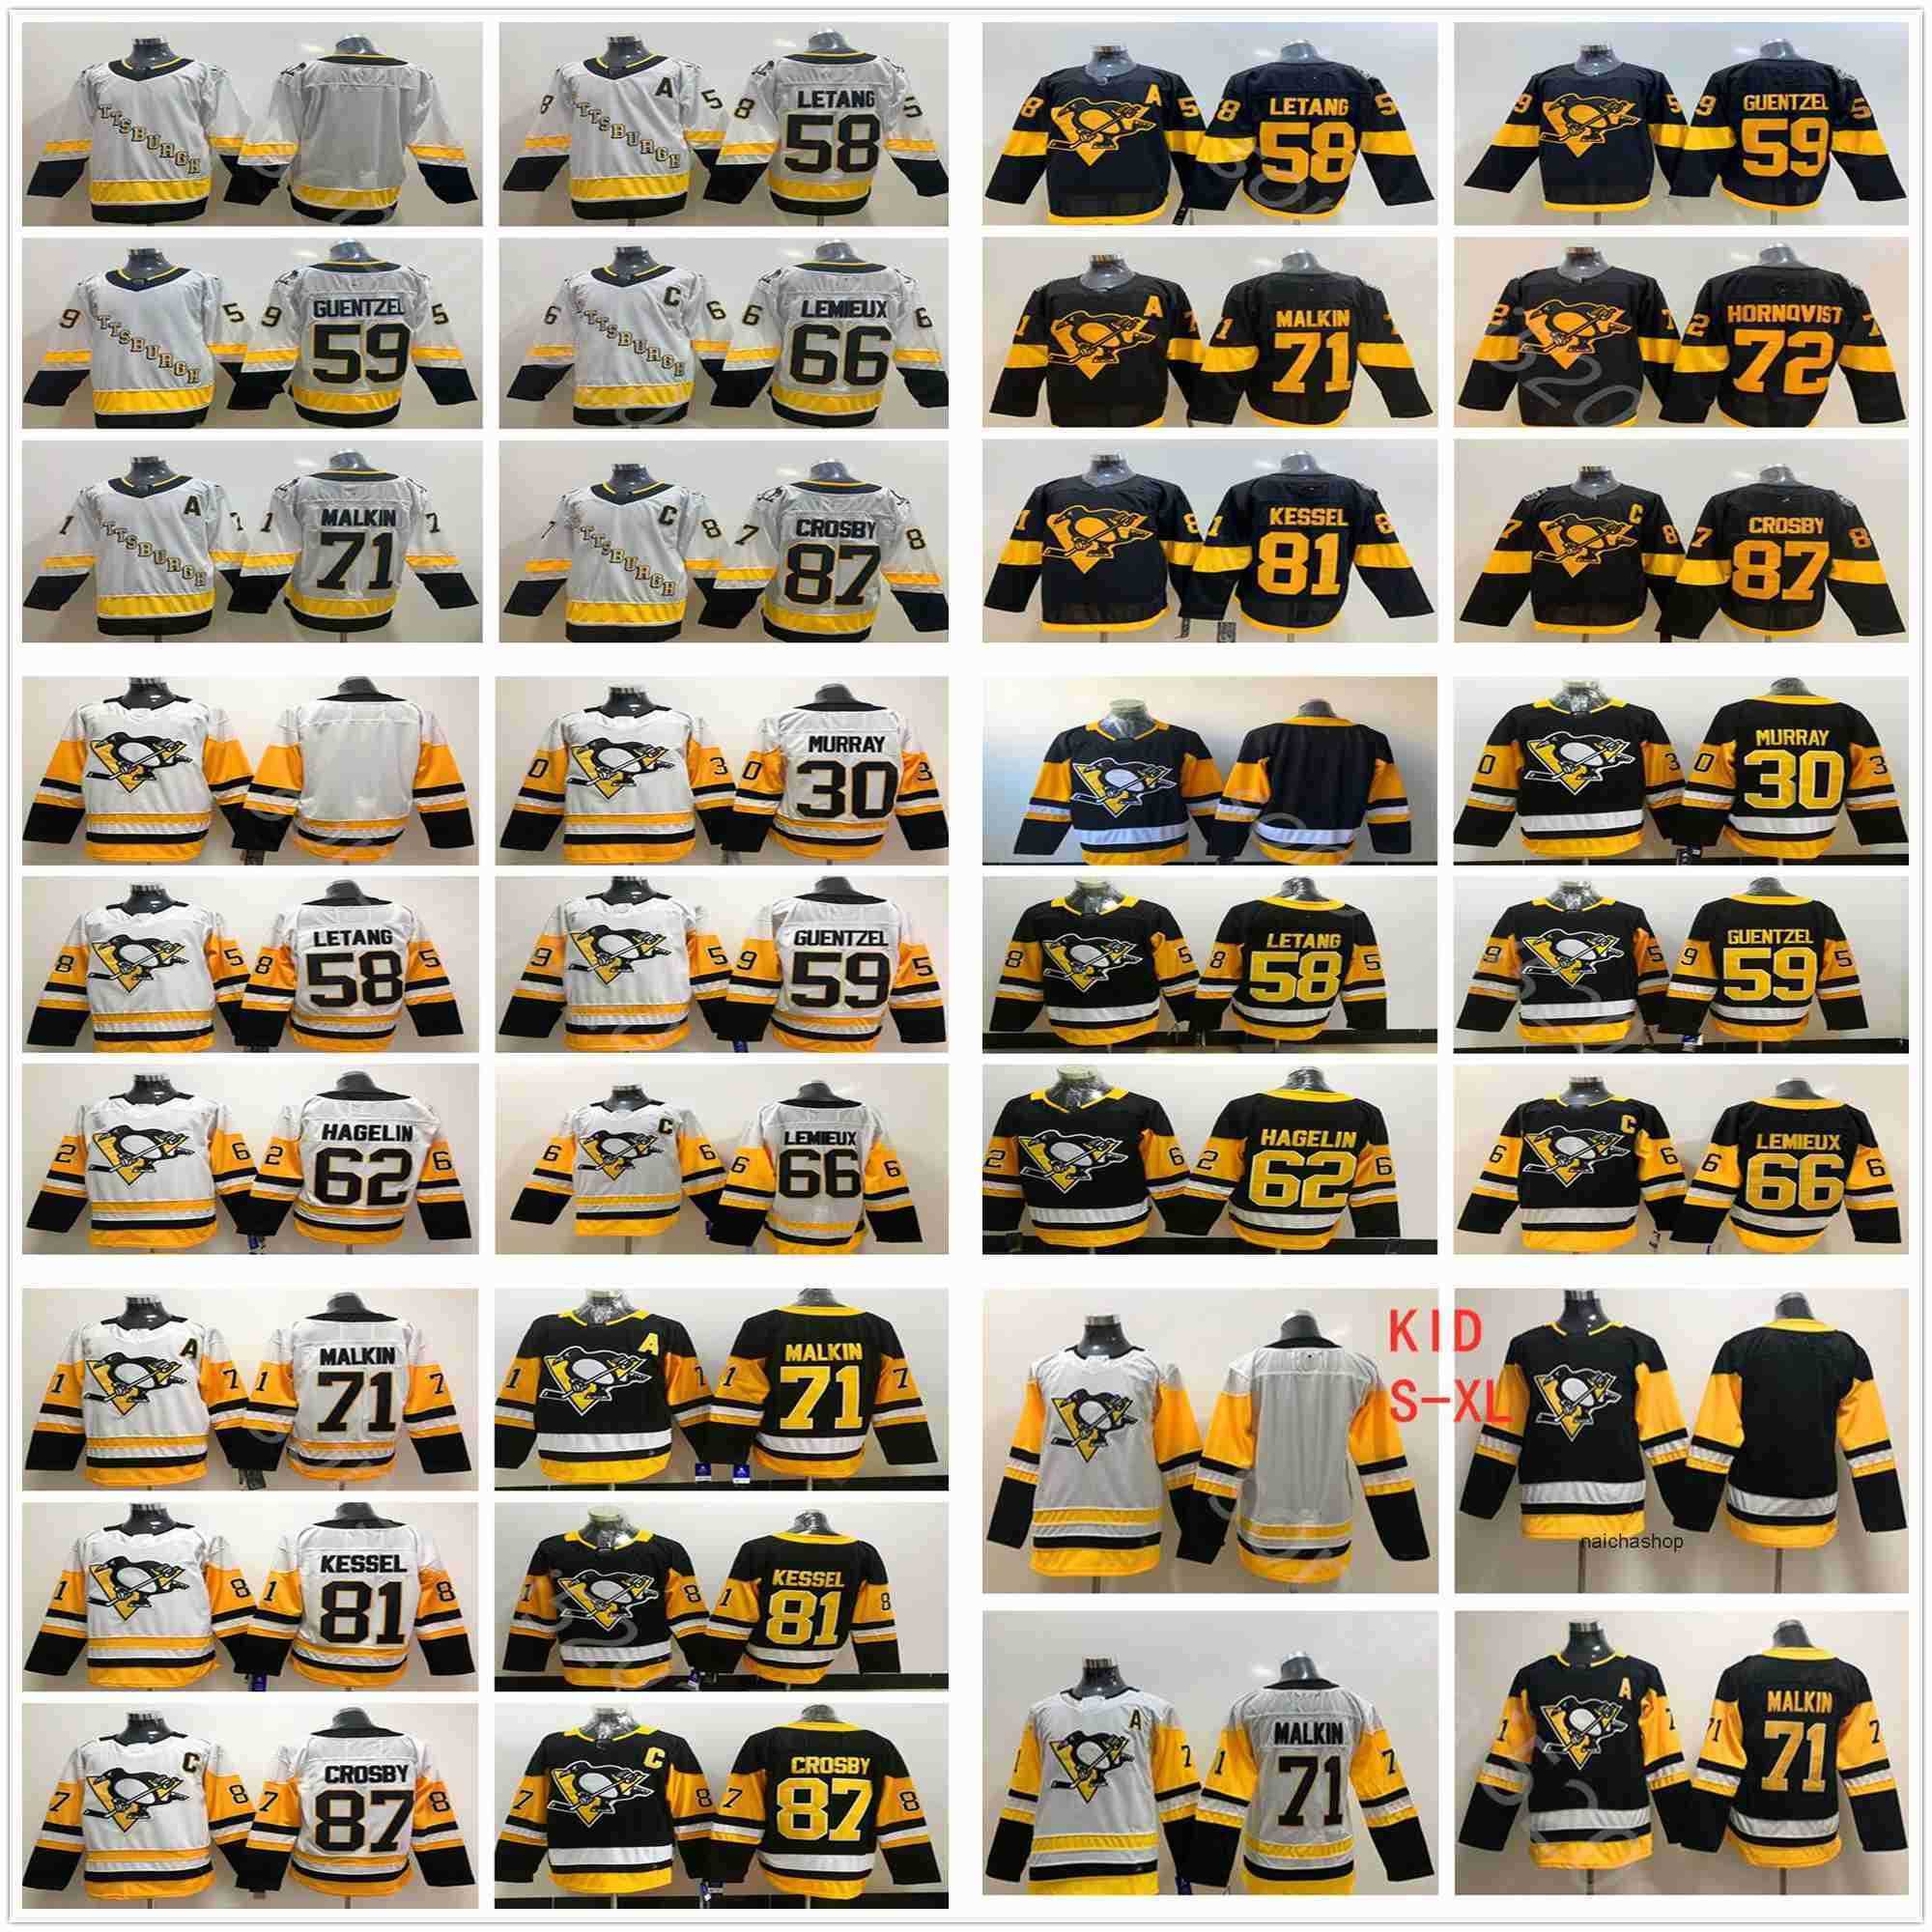 

Mens Kids Pittsburgh Penguins 87 Sidney Crosby 71 Evgeni Malkin 58 Kris Letang 59 Jake Guentzel 66 Lemieux 81 Phil Kessel RBK hockey jerseys nhl' Jerseys, Beige